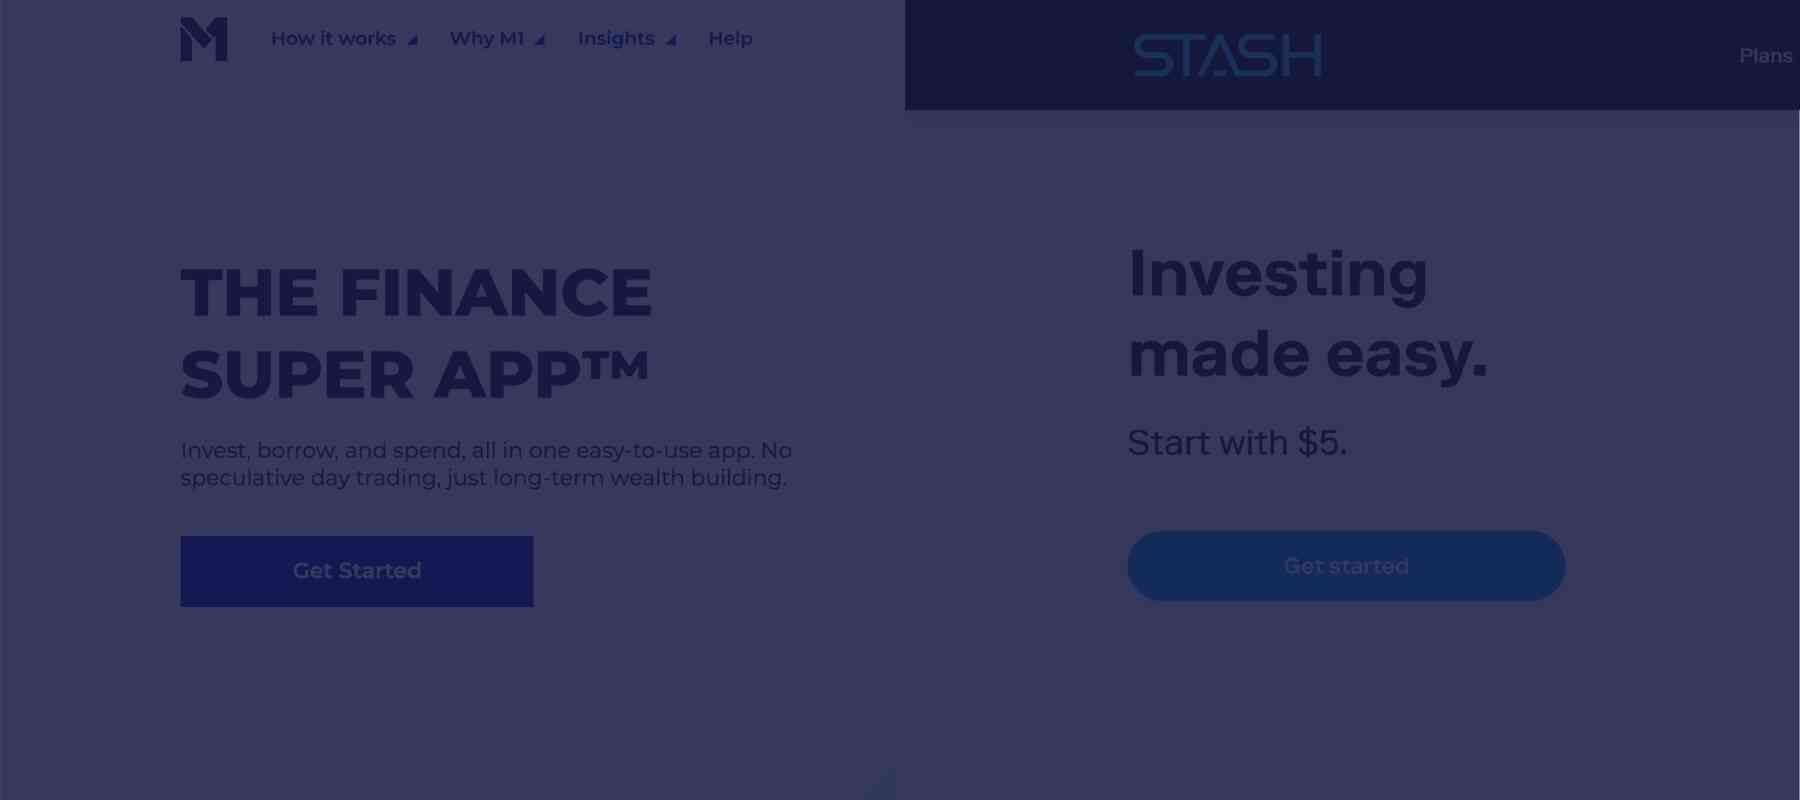 M1 Finance vs Stash